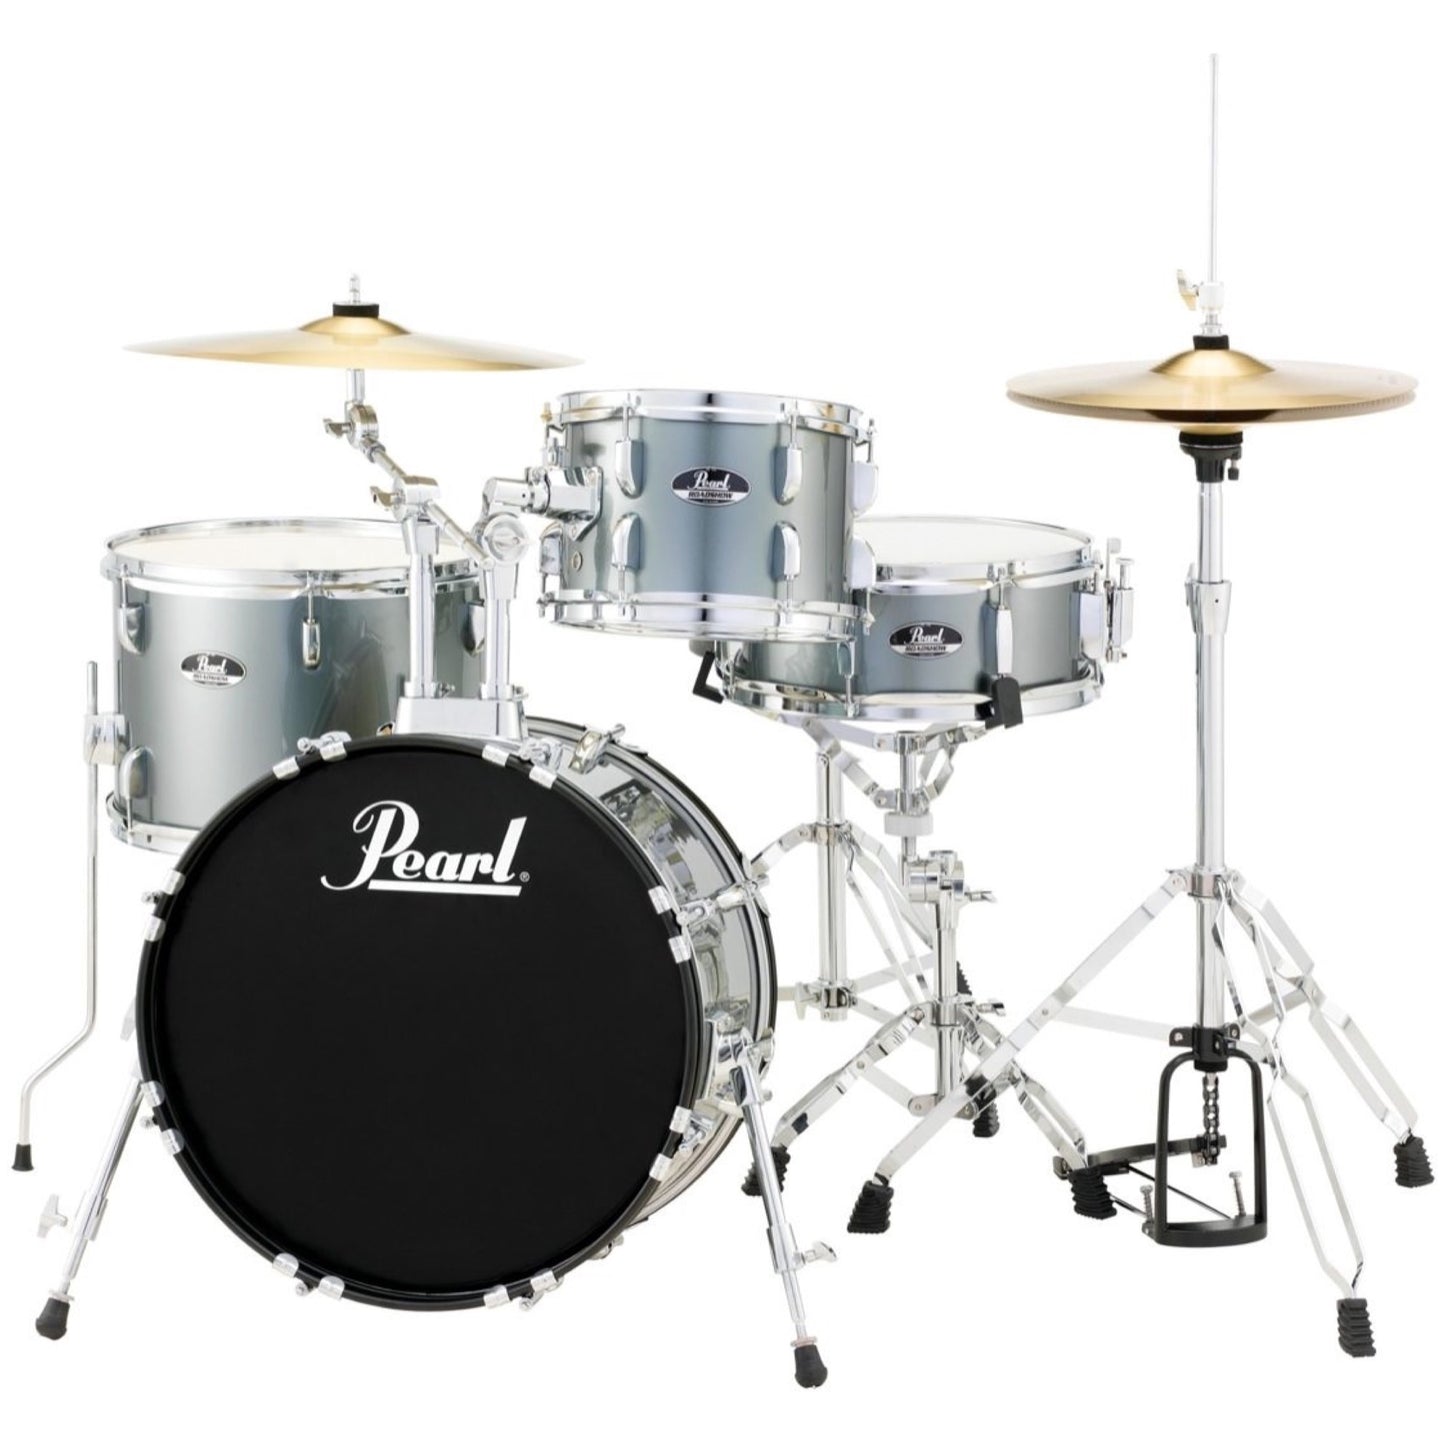 Pearl RS584C Roadshow Complete Bop Drum Kit, 4-Piece, Charcoal Metal